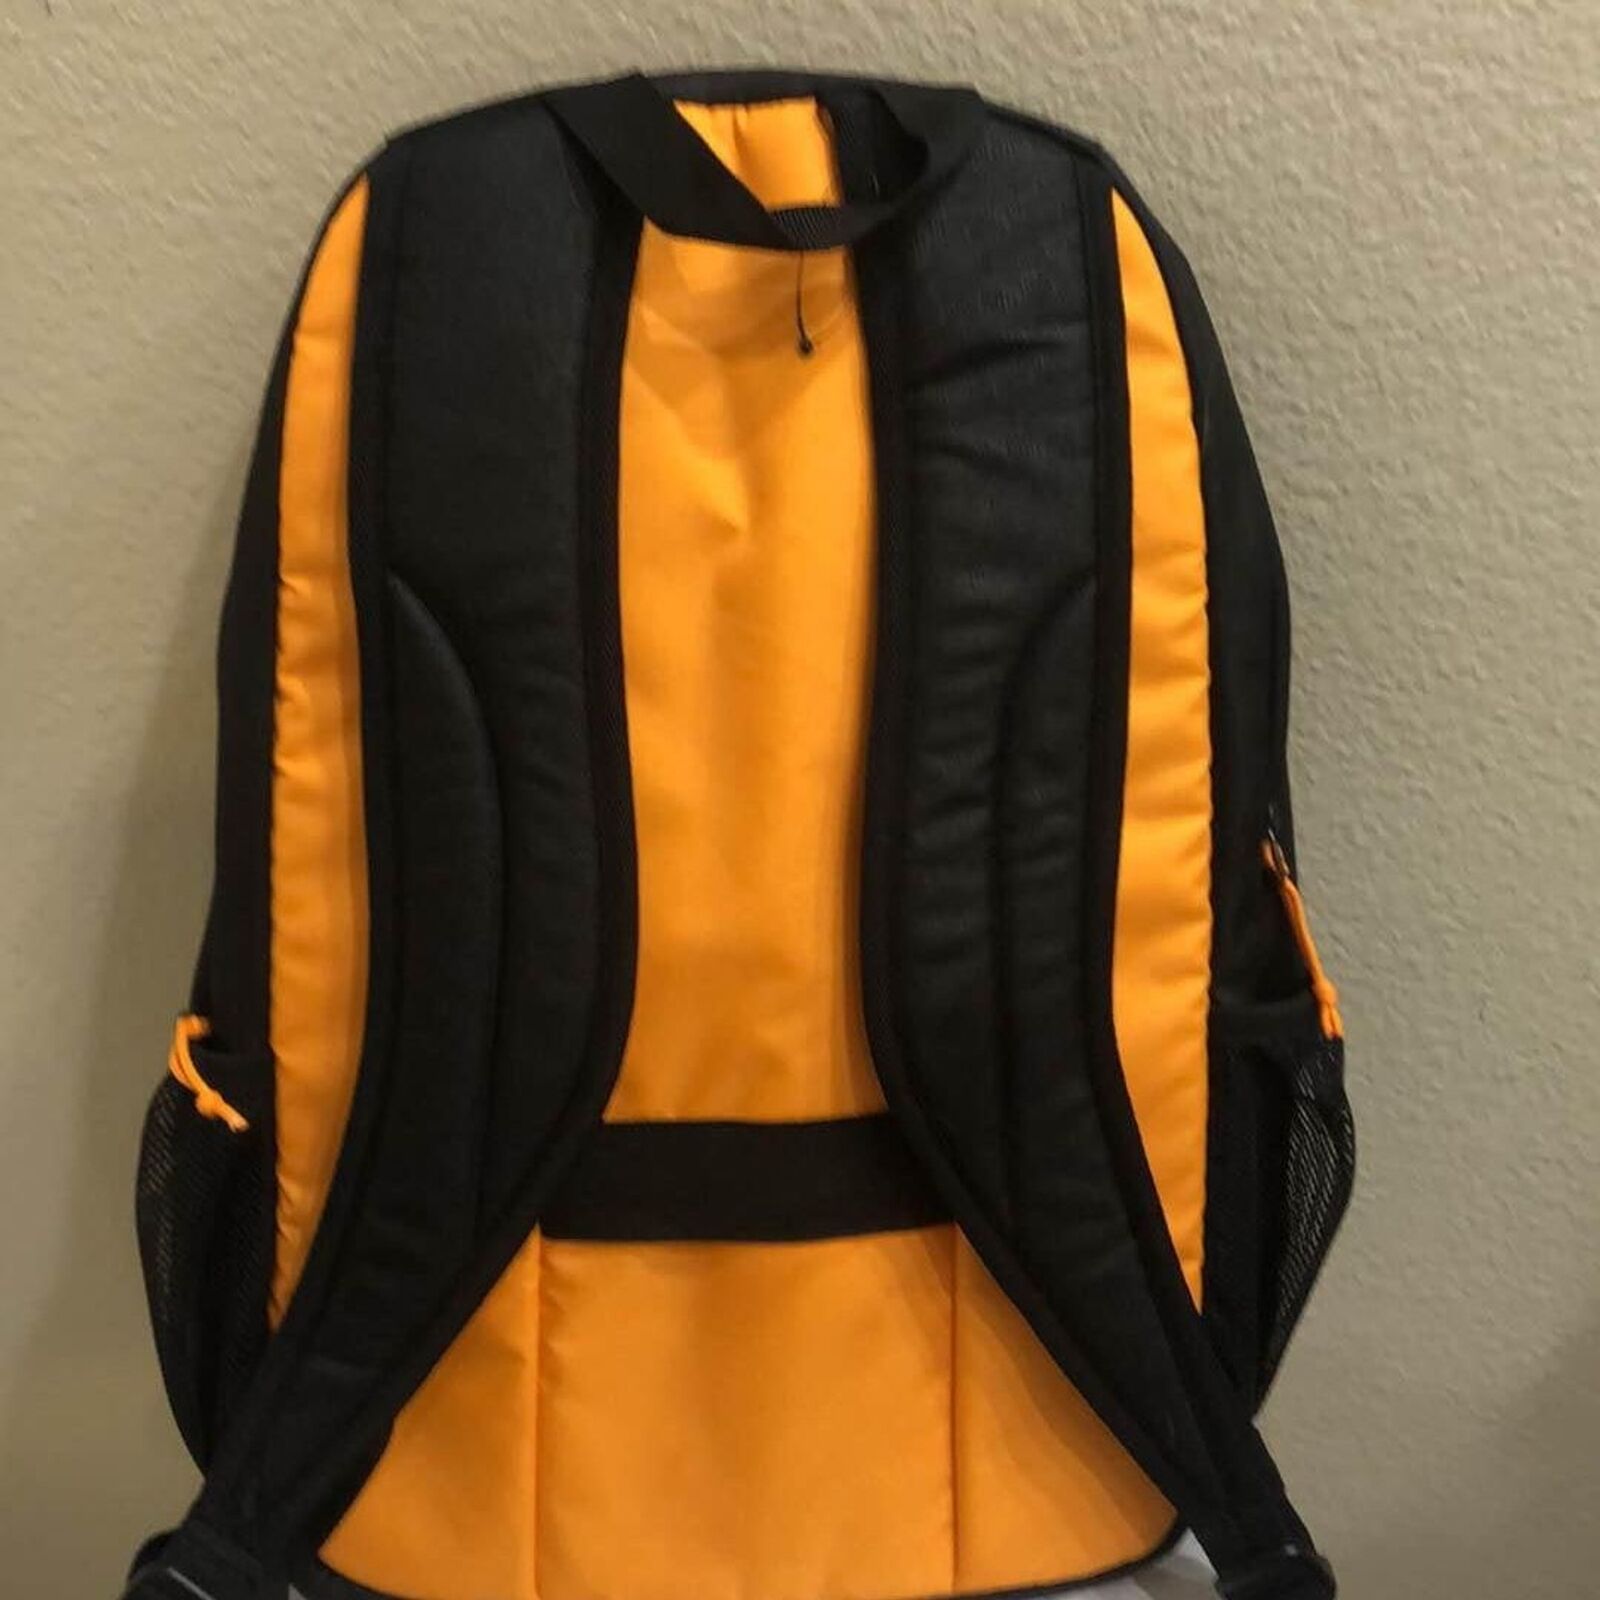 New Leeds Case Logic Laptop Backpack black orange 15/16”